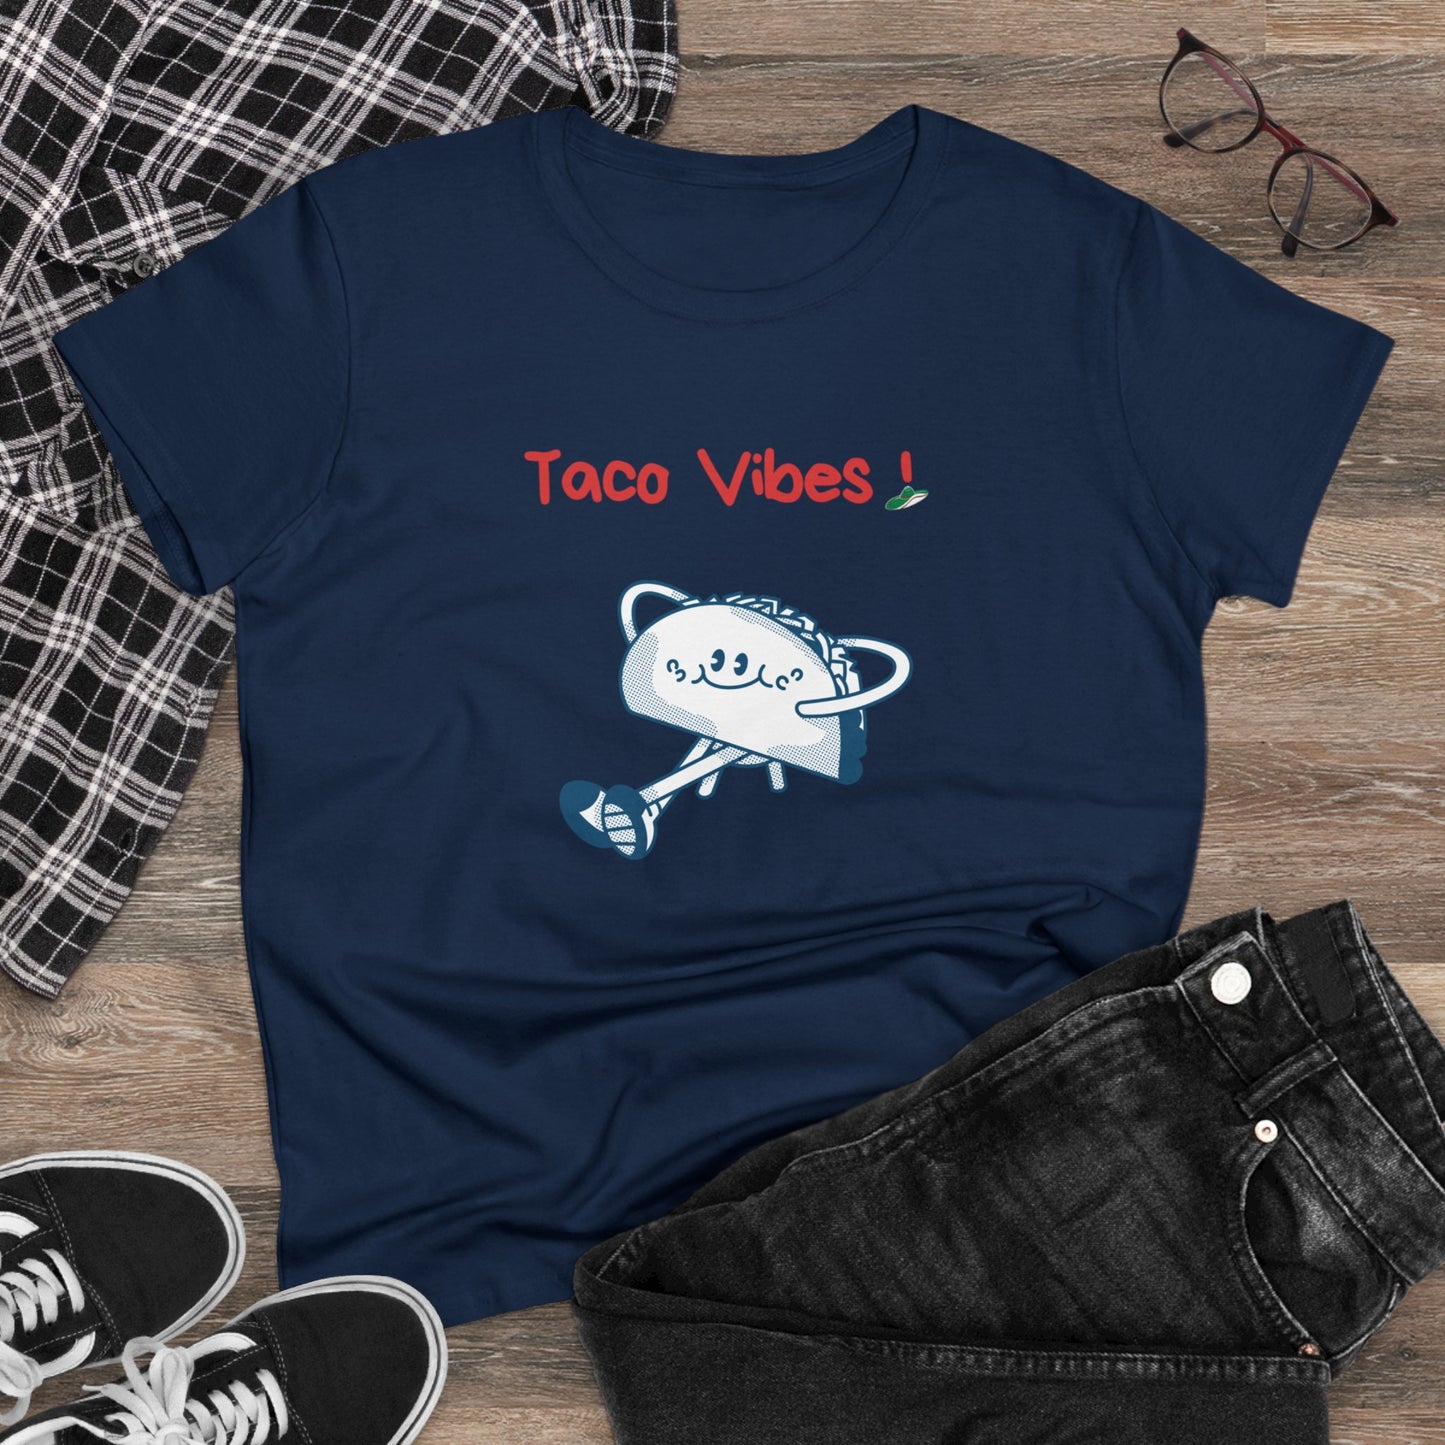 Taco Vibes! Women's Midweight Cotton Tee